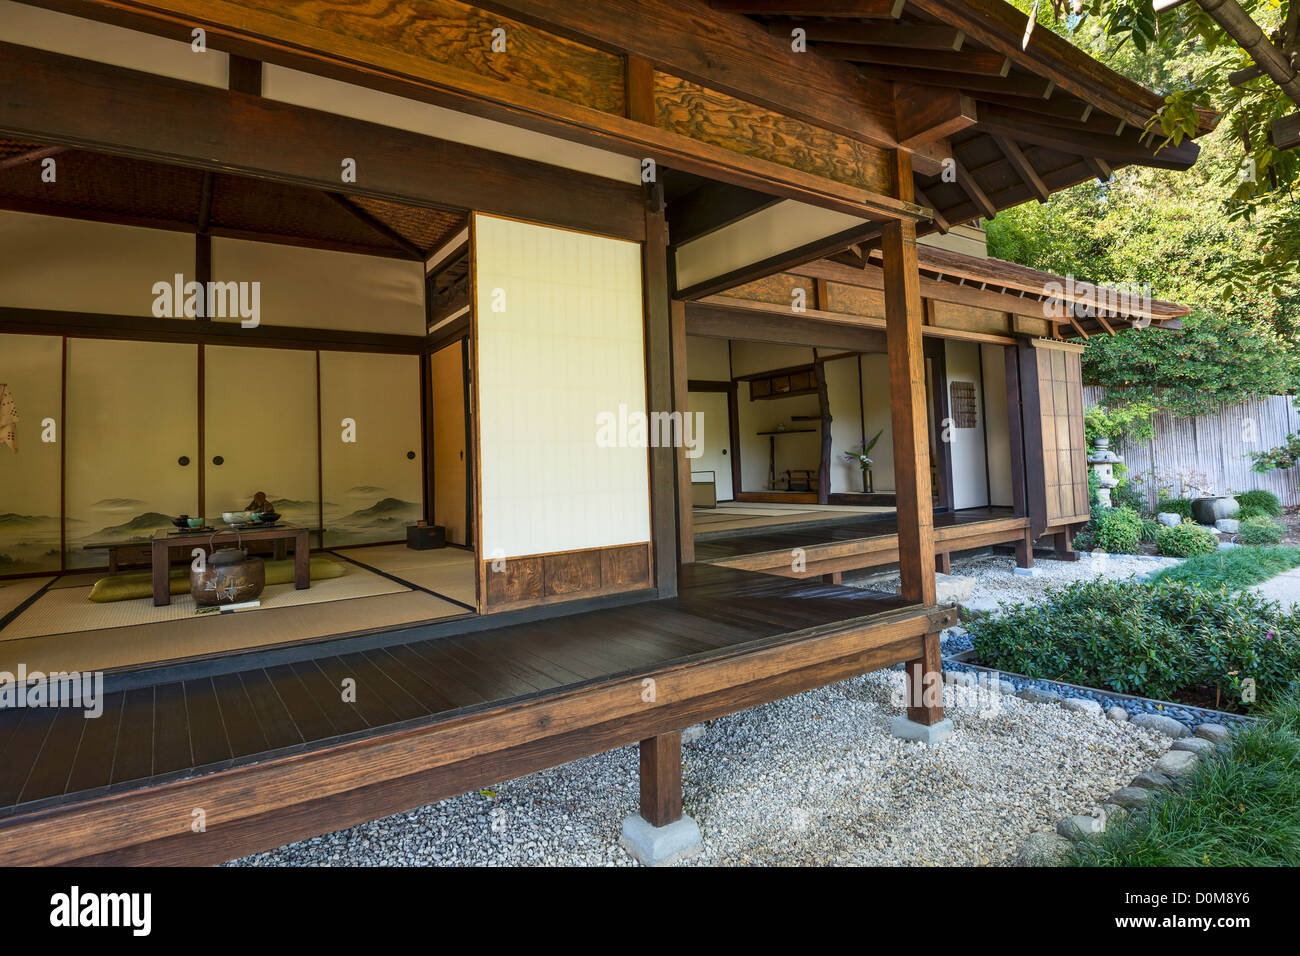 Japanese Tea House Exhibit At The Huntington Library S Japanese